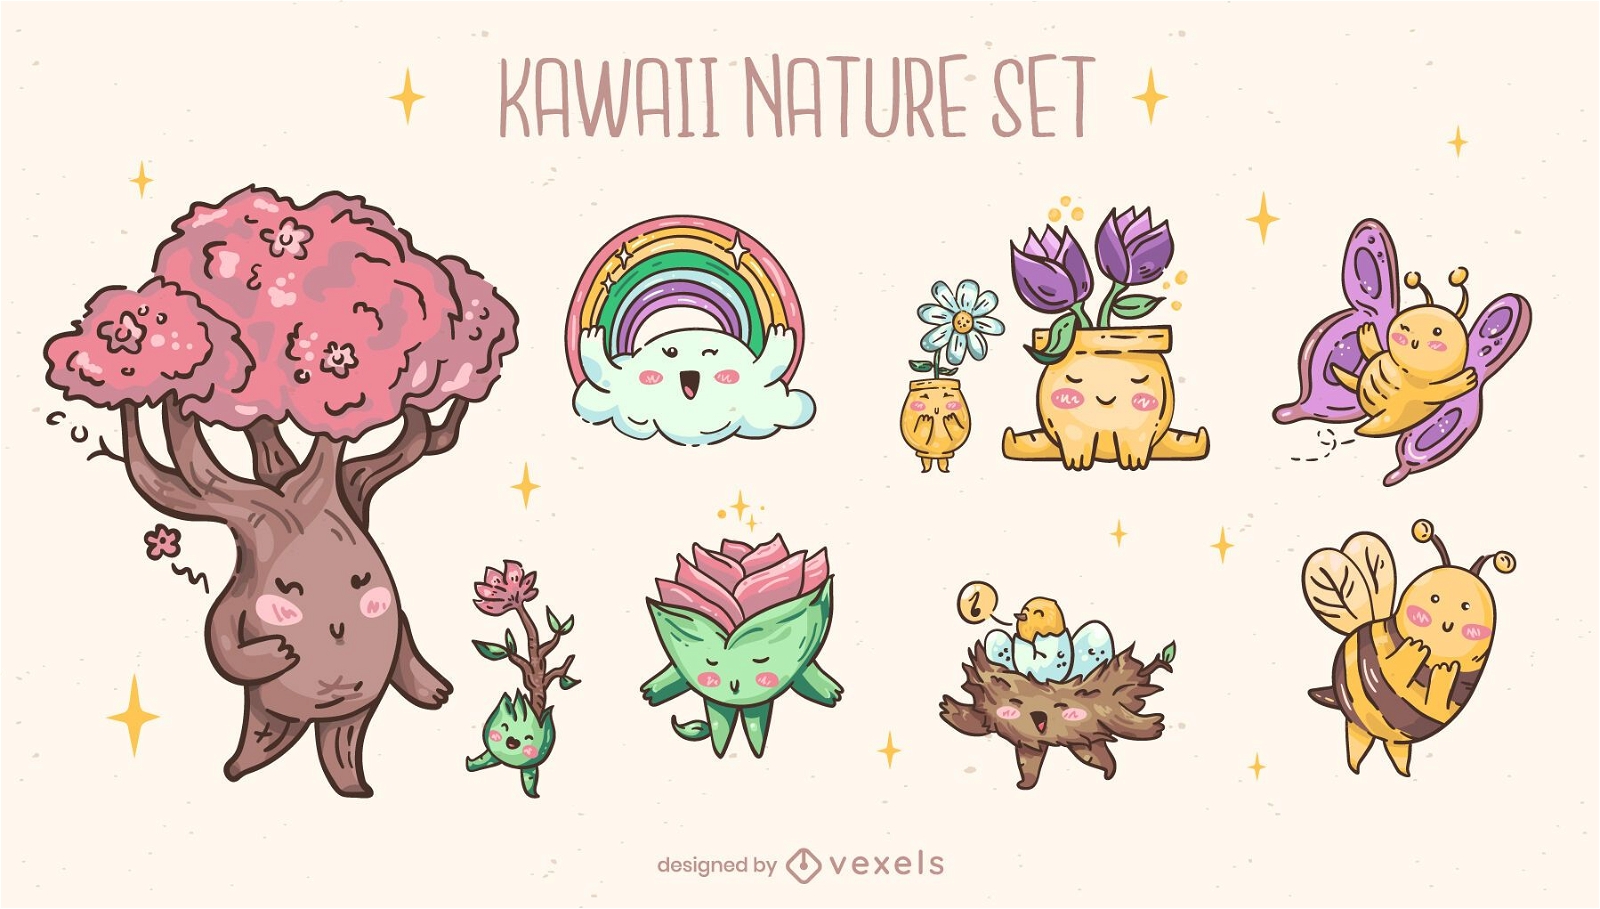 Kawaii nature character set